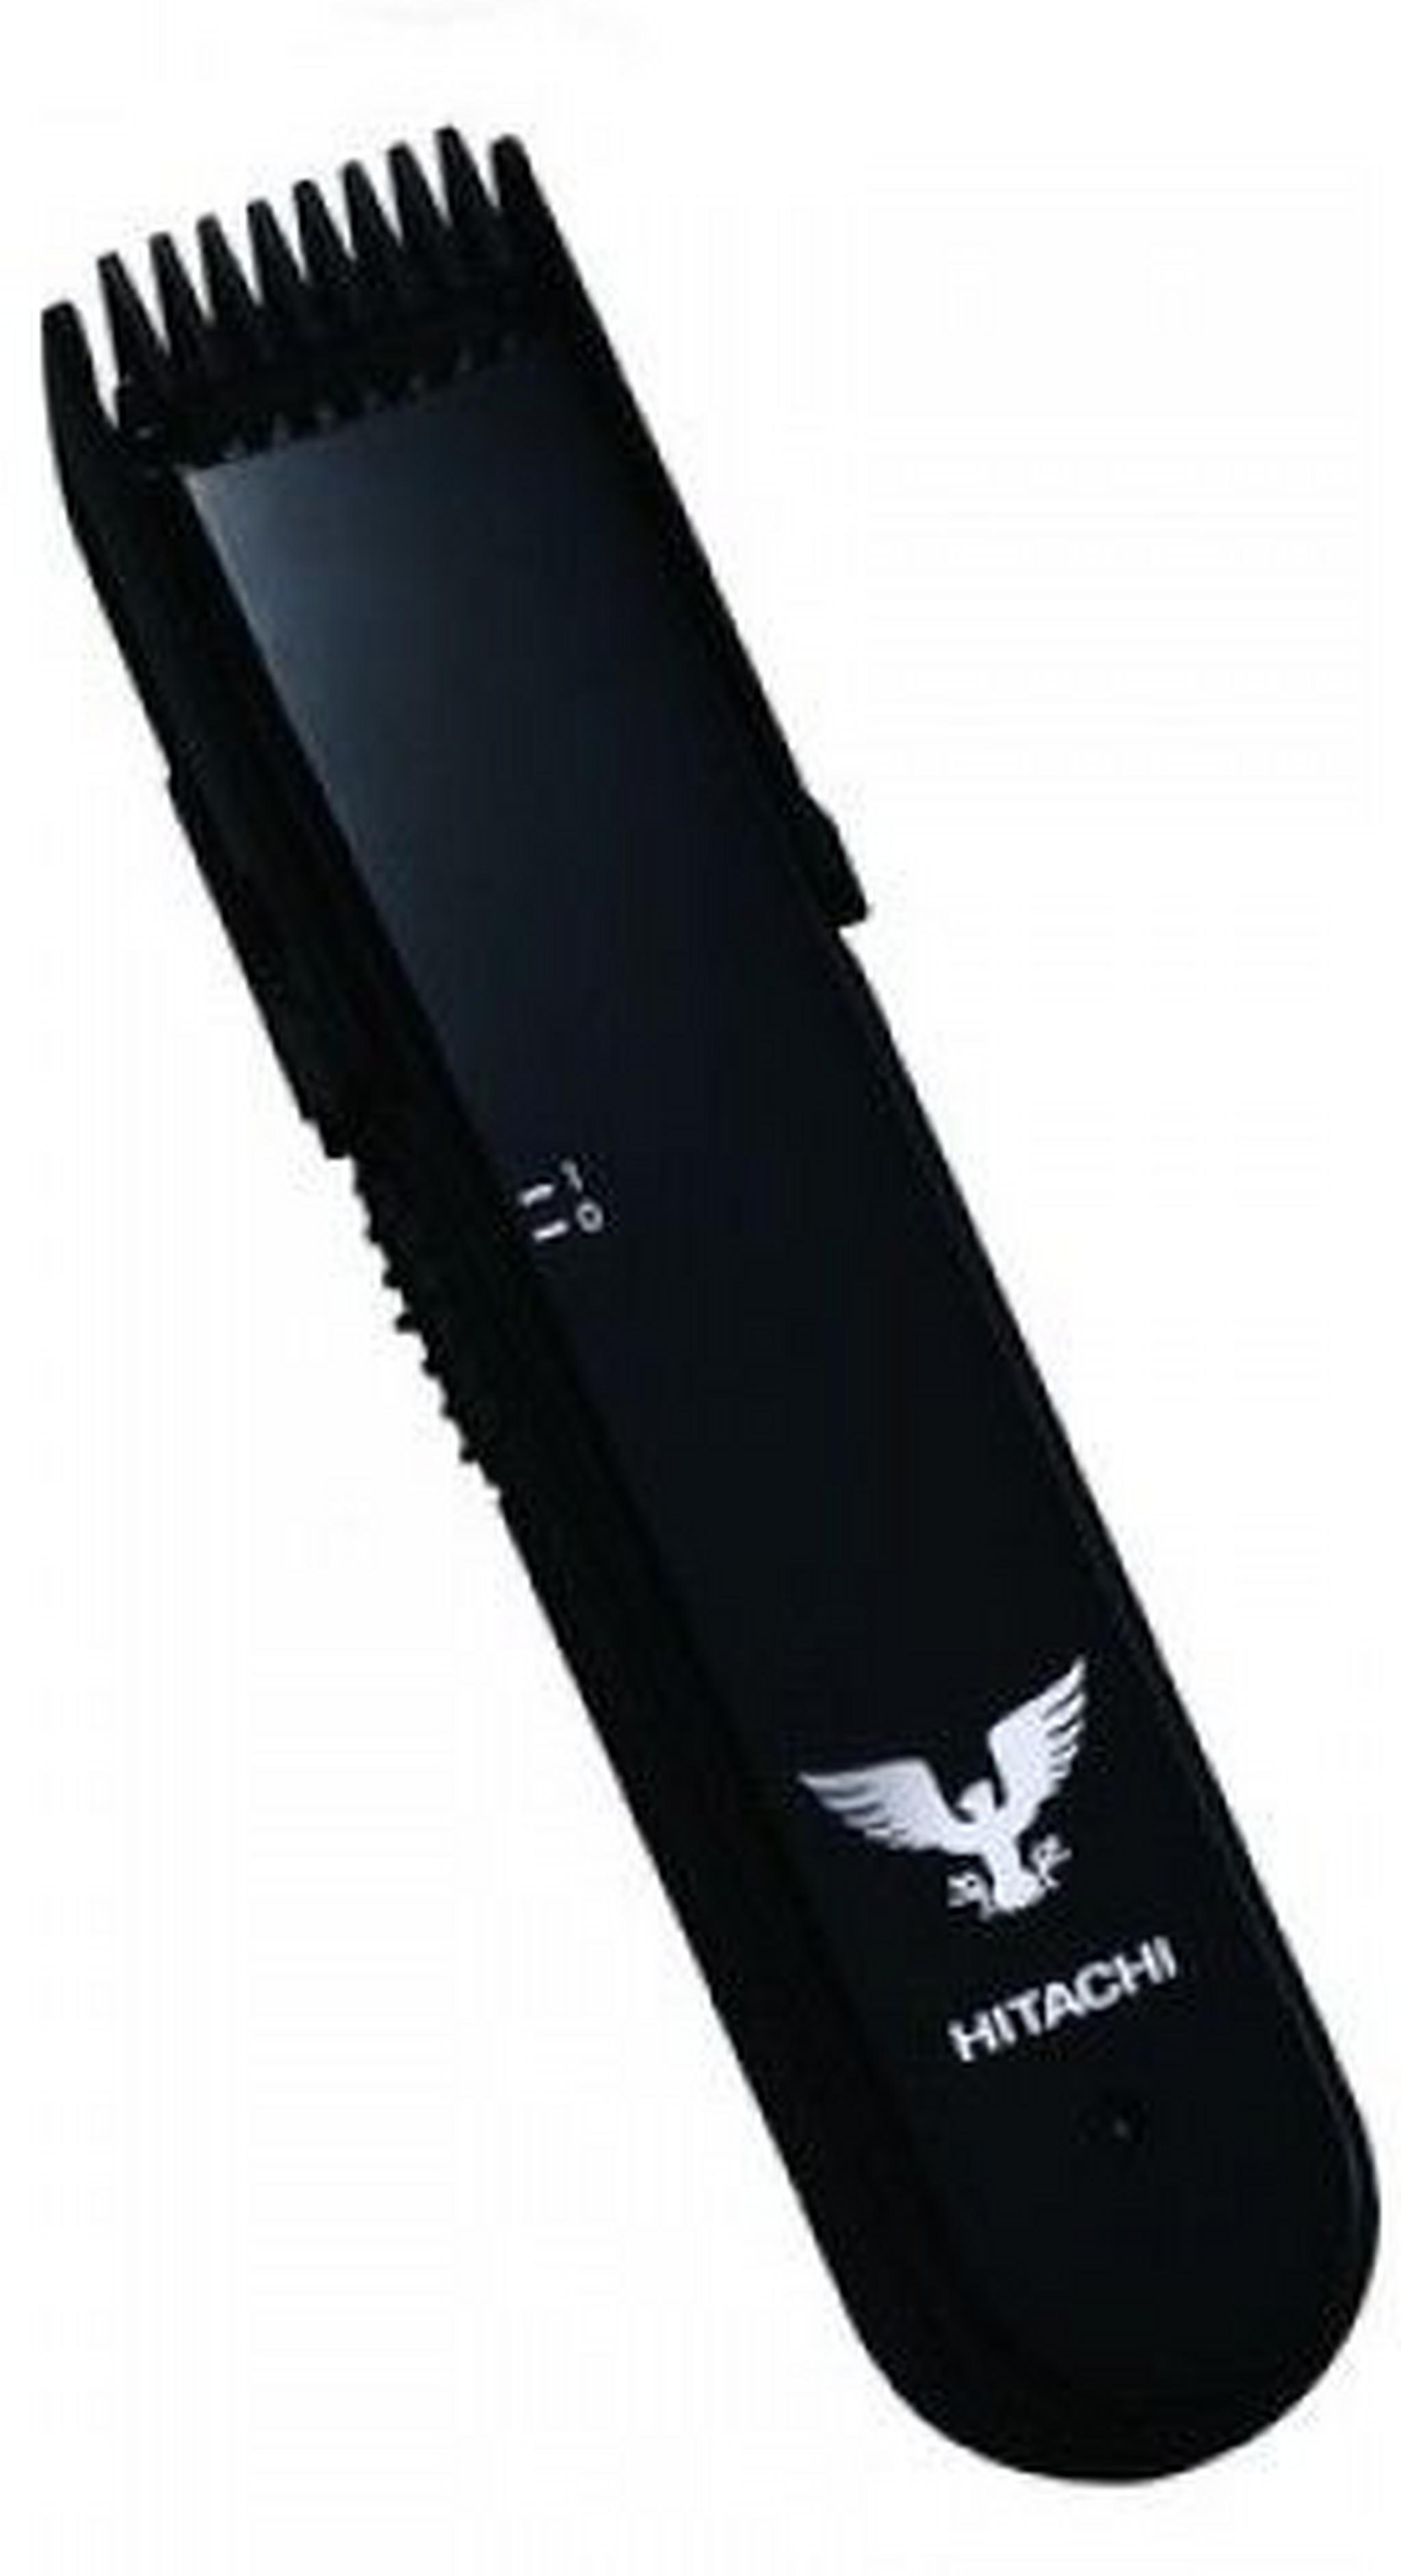 Hitachi 5-Step Trimmer CL5100EX - Black